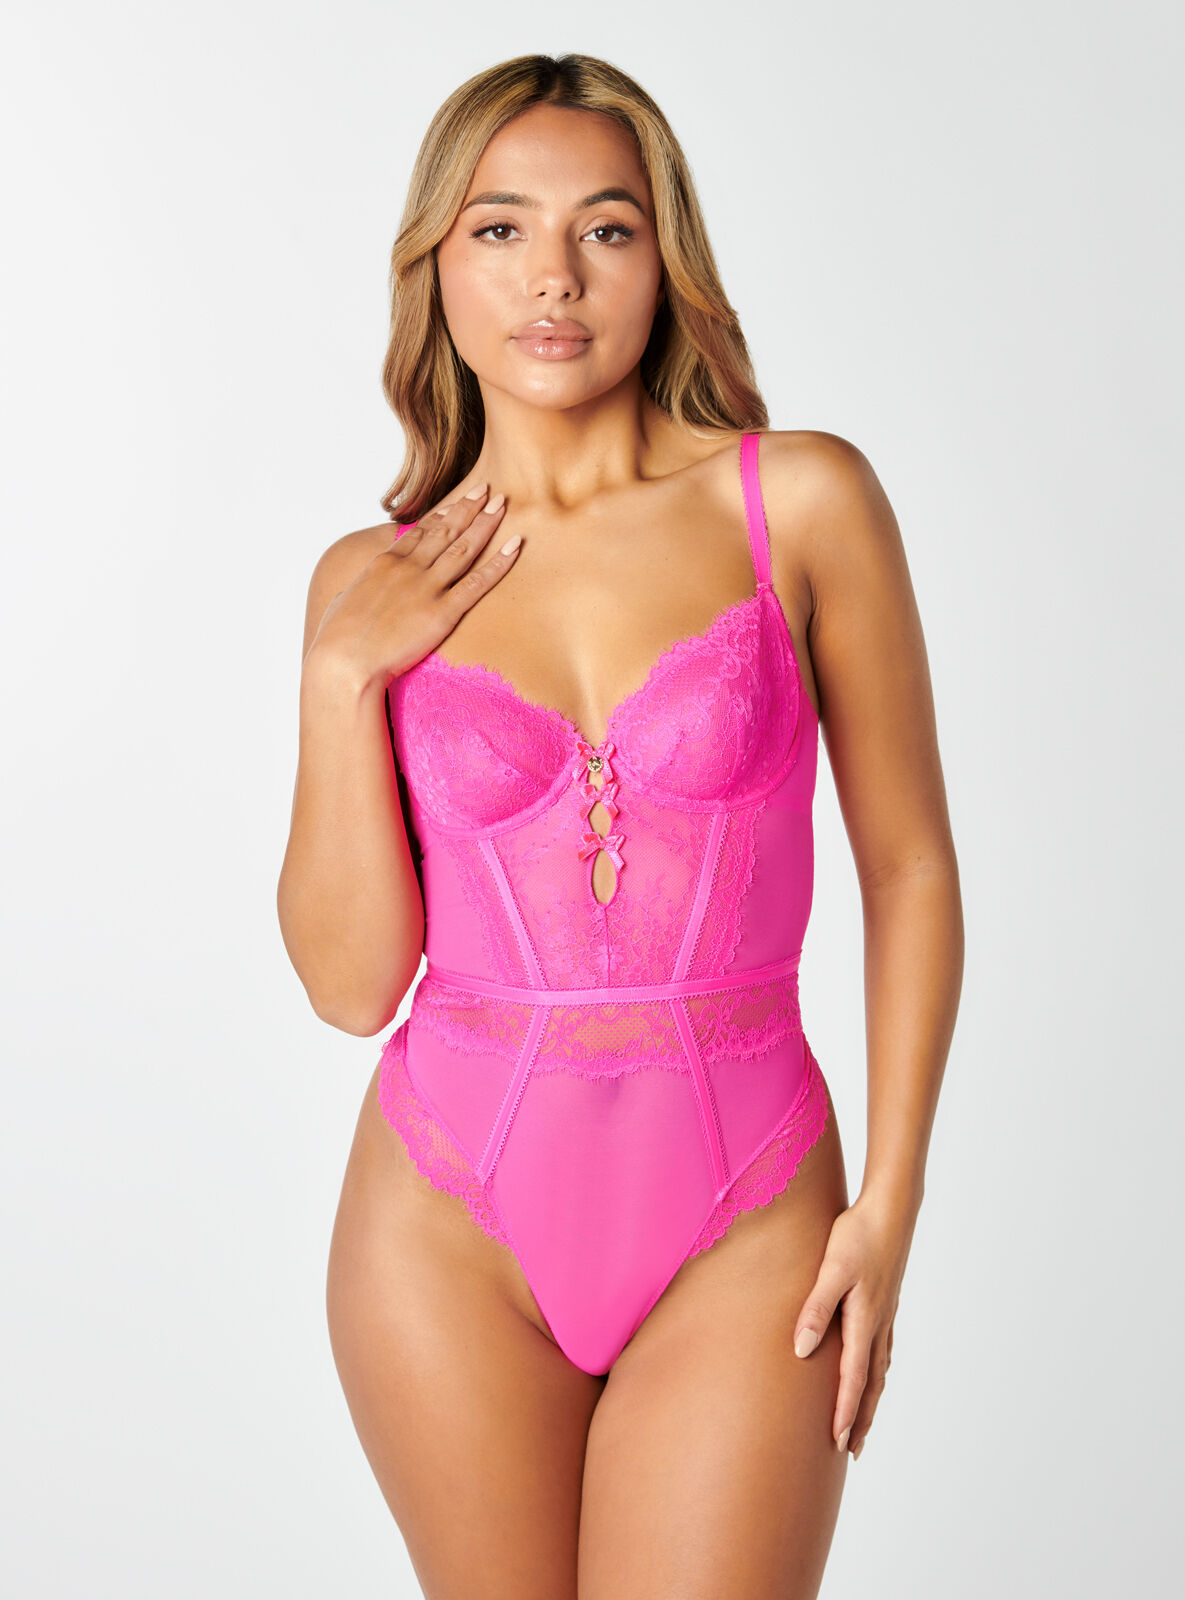 Boux Avenue Aubree body - Hot Pink - 30DD